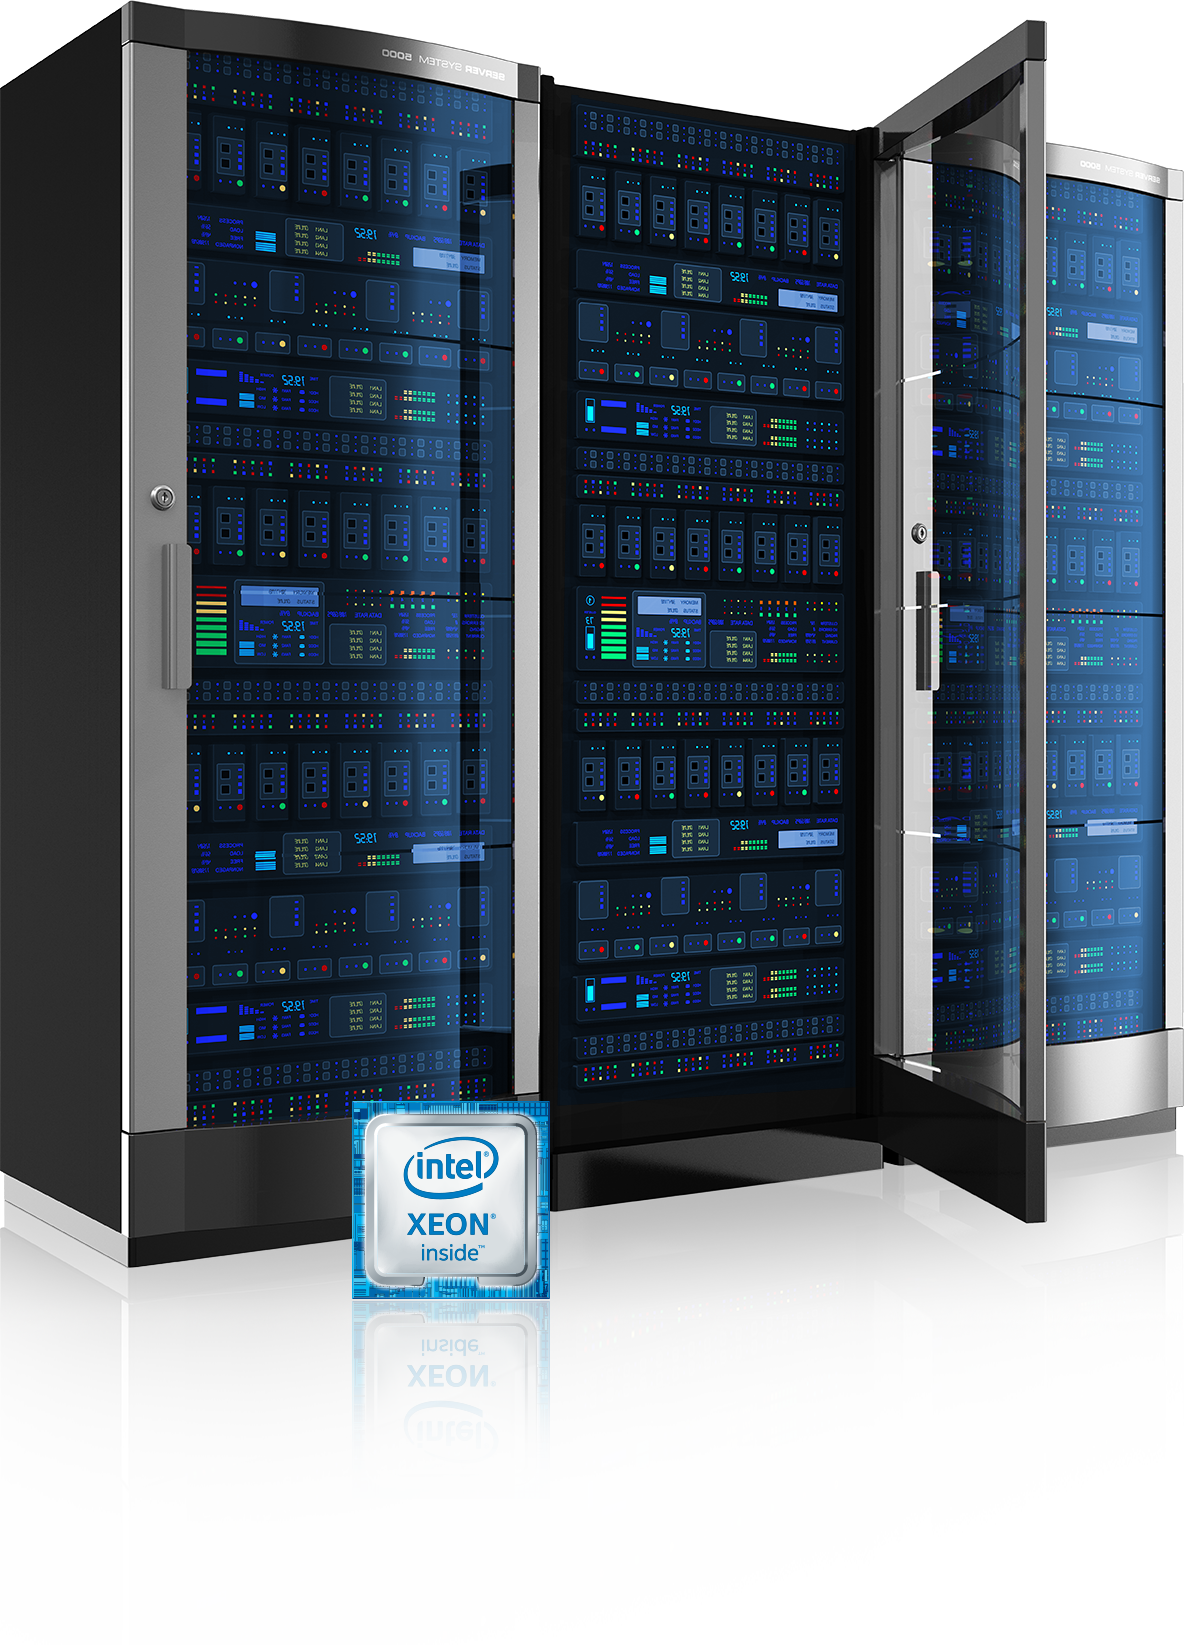 Сервер Интел Xeon. Кластерный компьютер. Вычислительный кластер. Cluster компьютеры. Cpu сервера